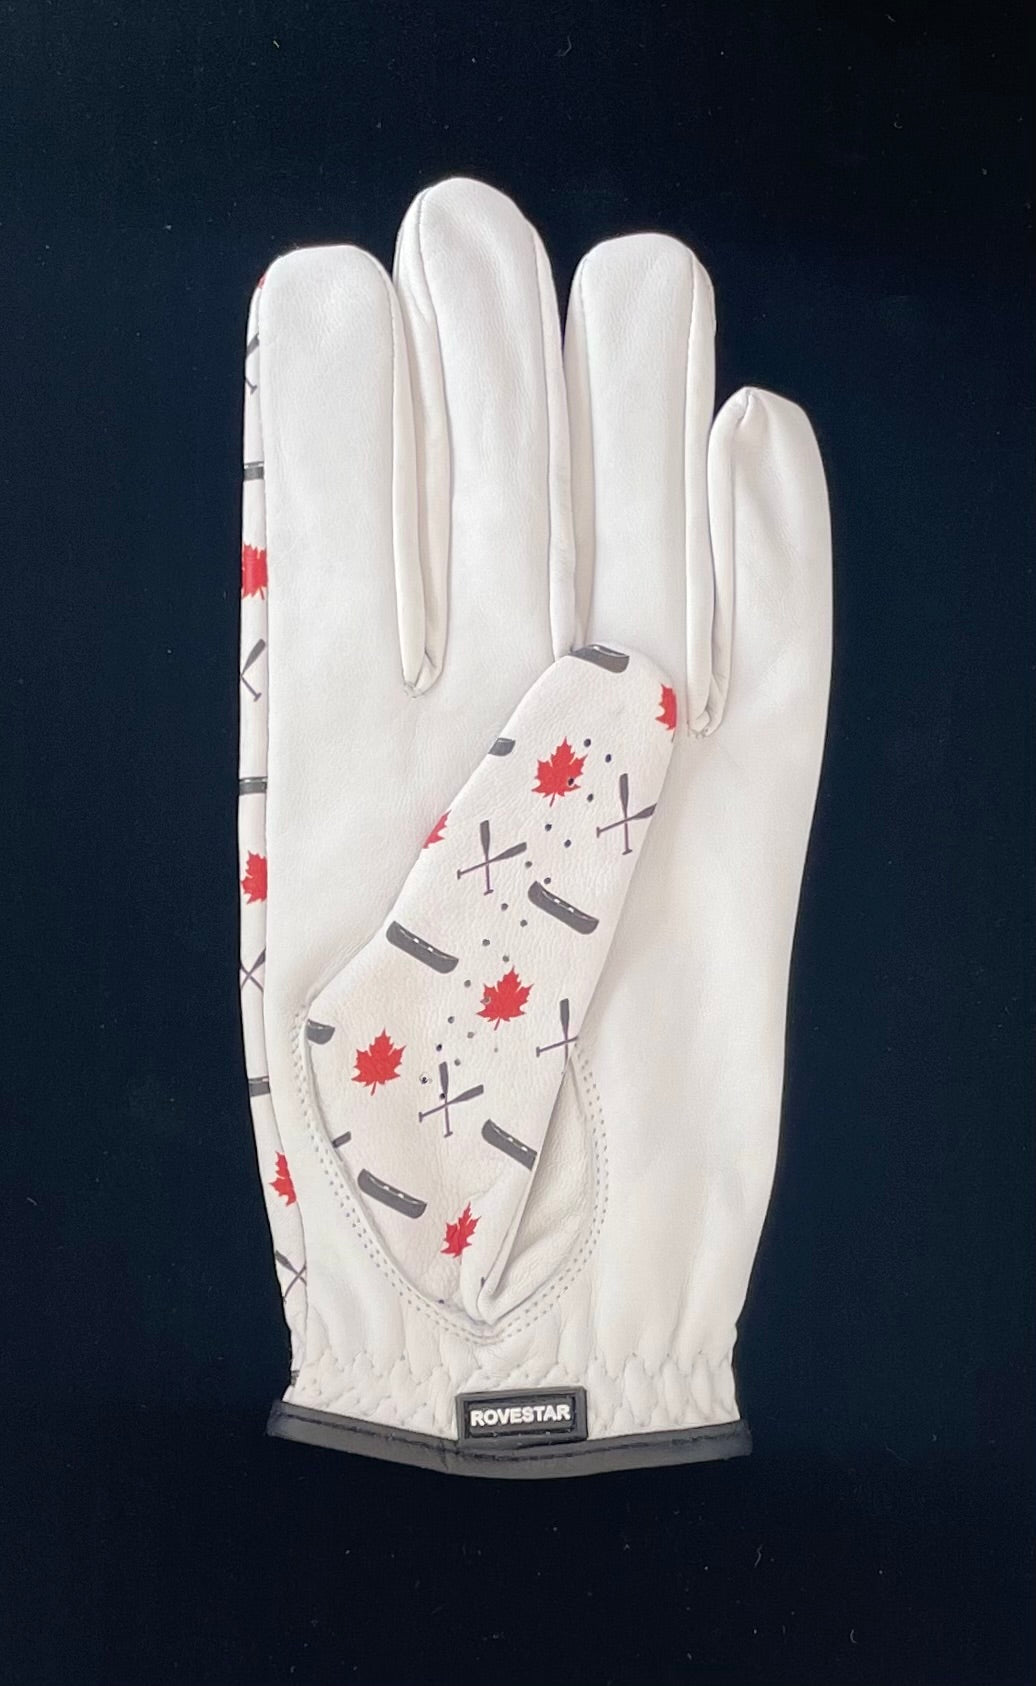 Canadian Golf Glove for Men